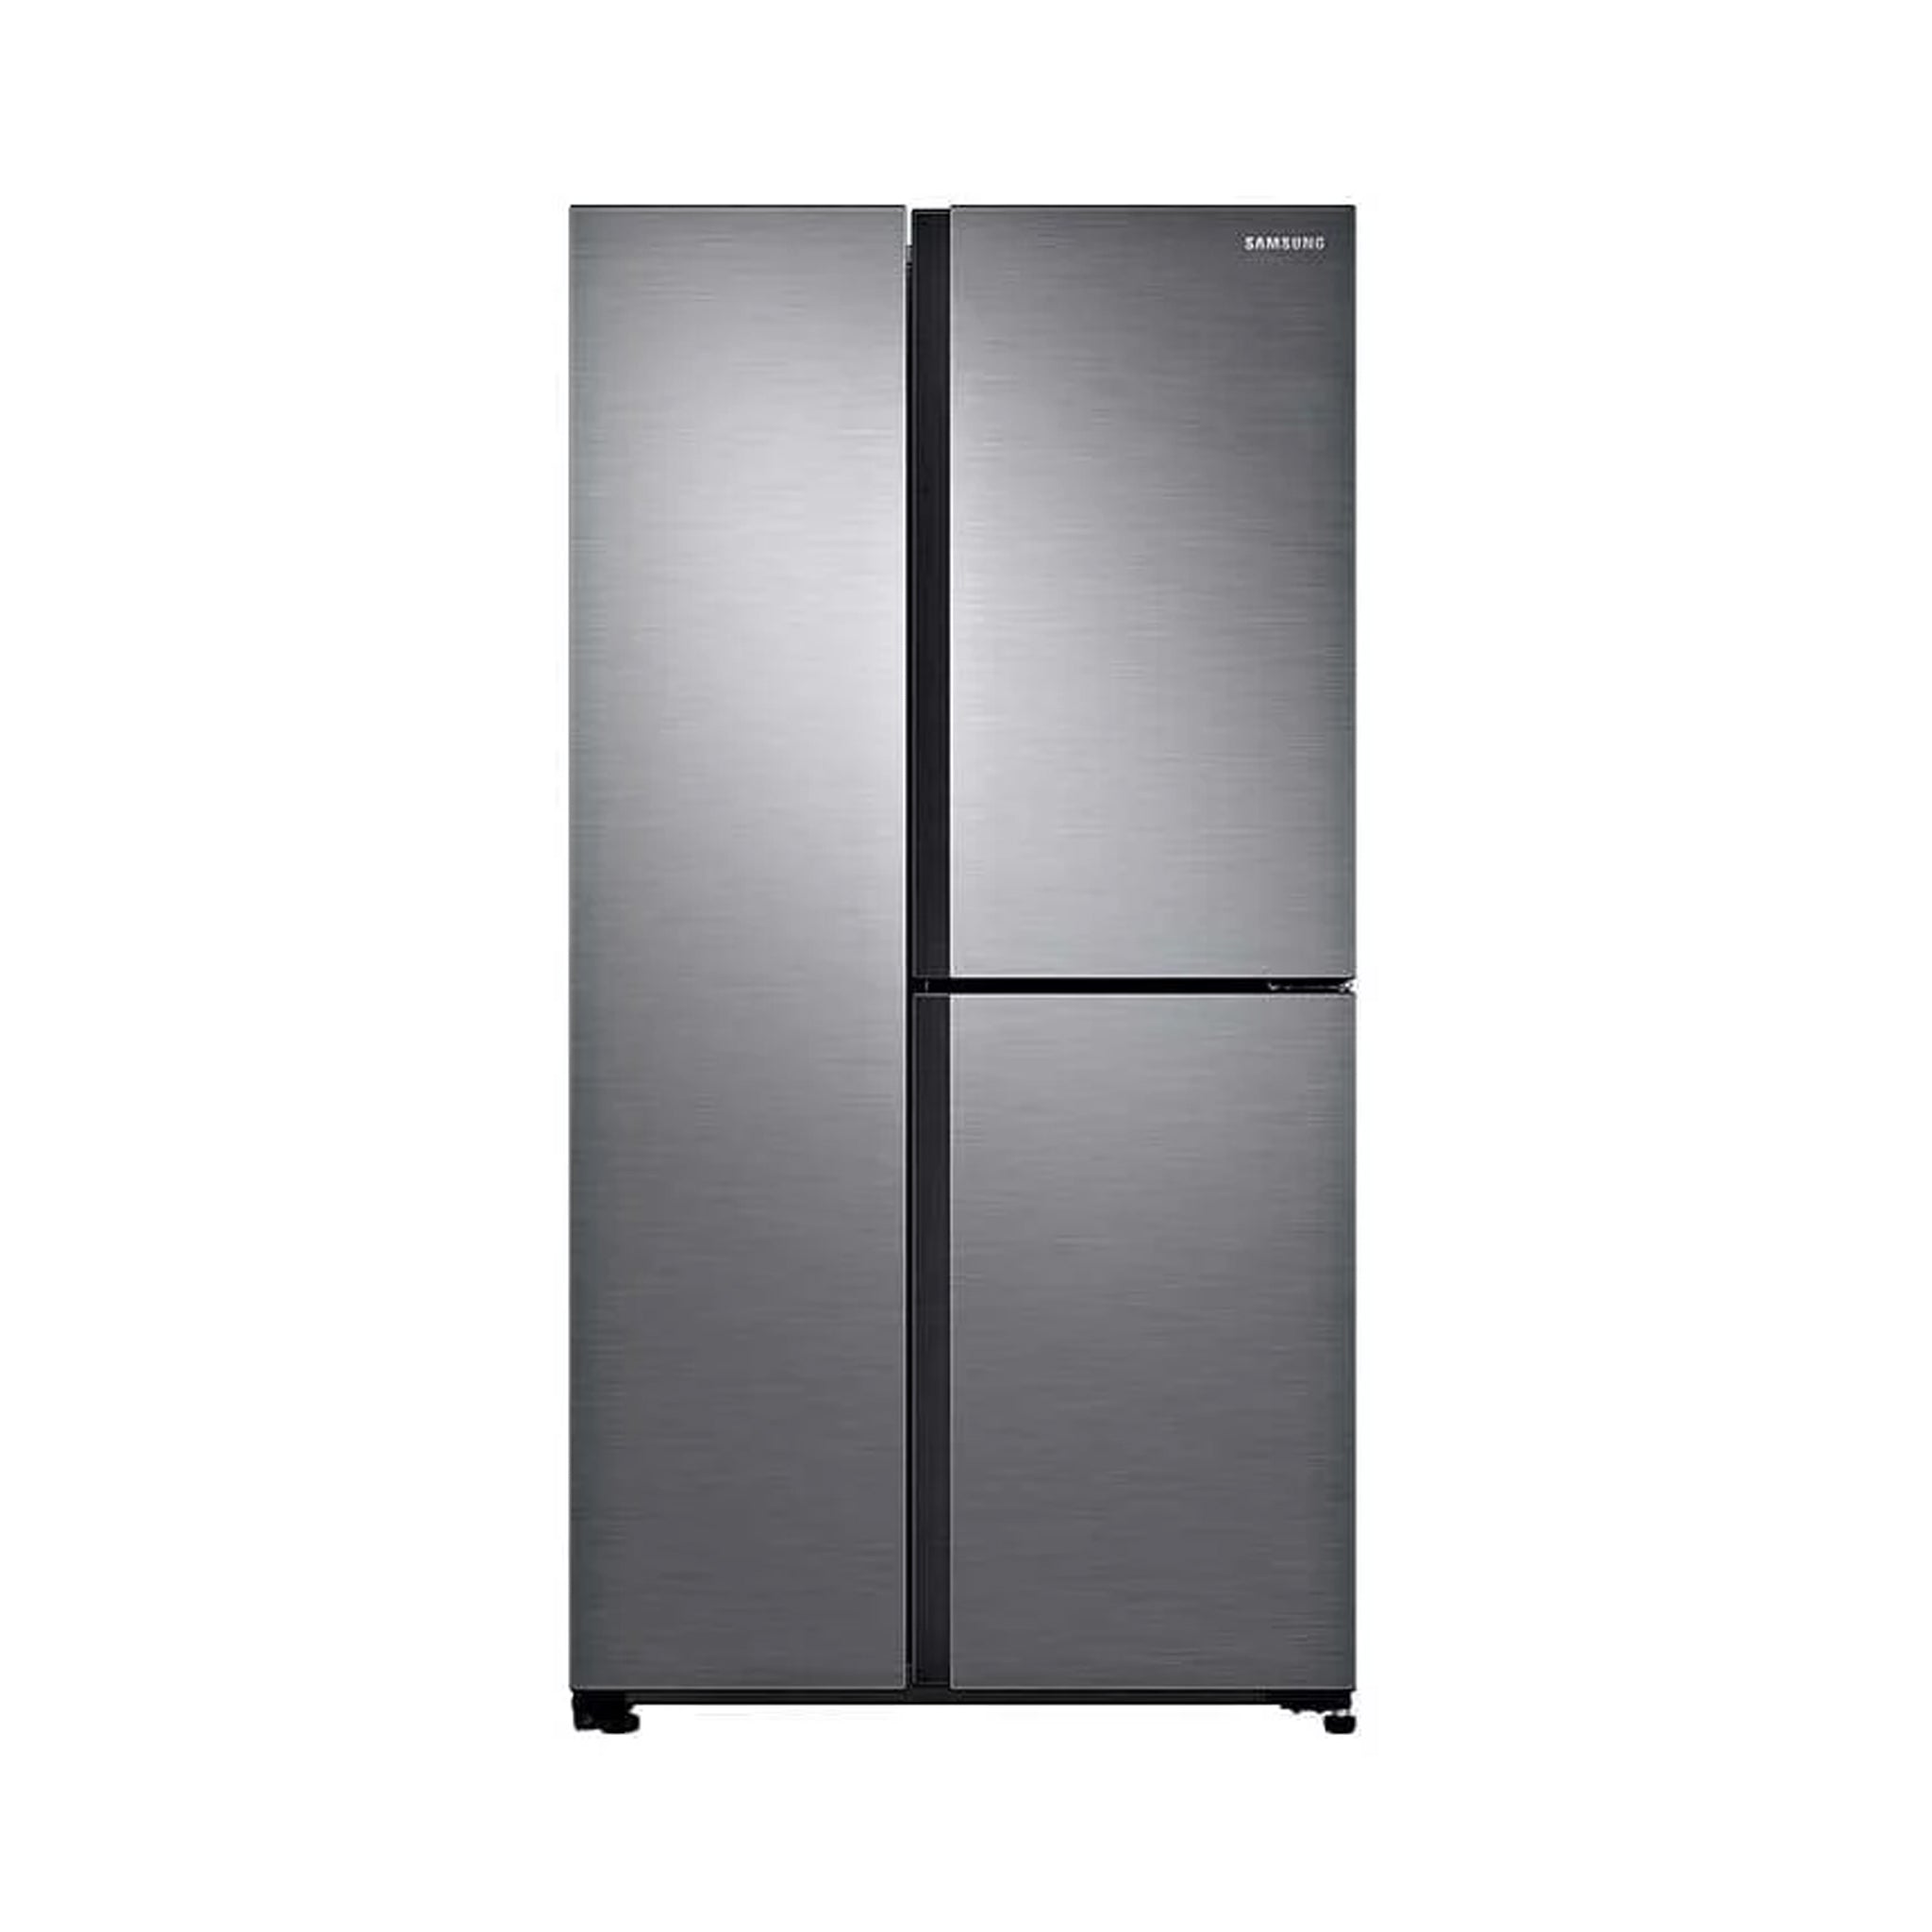 SAMSUNG RS63R5561M9 24.3 cu.ft Side by Side Refrigerator Samsung